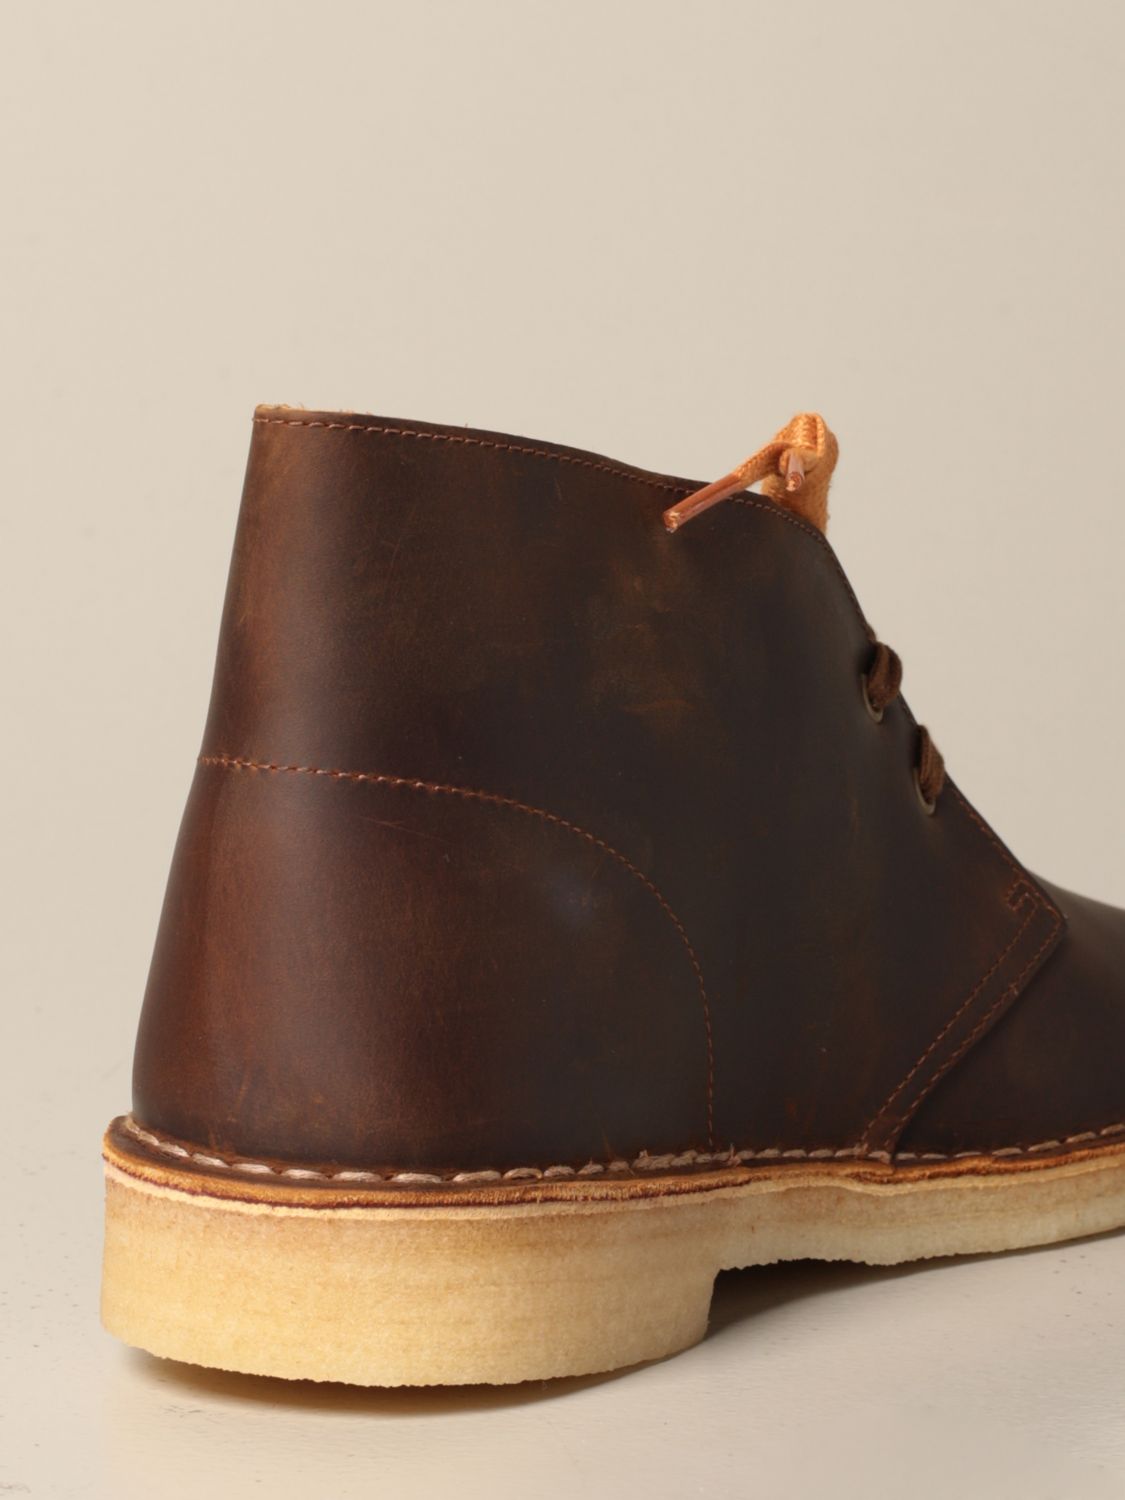 clarks desert boots vintage brown leather